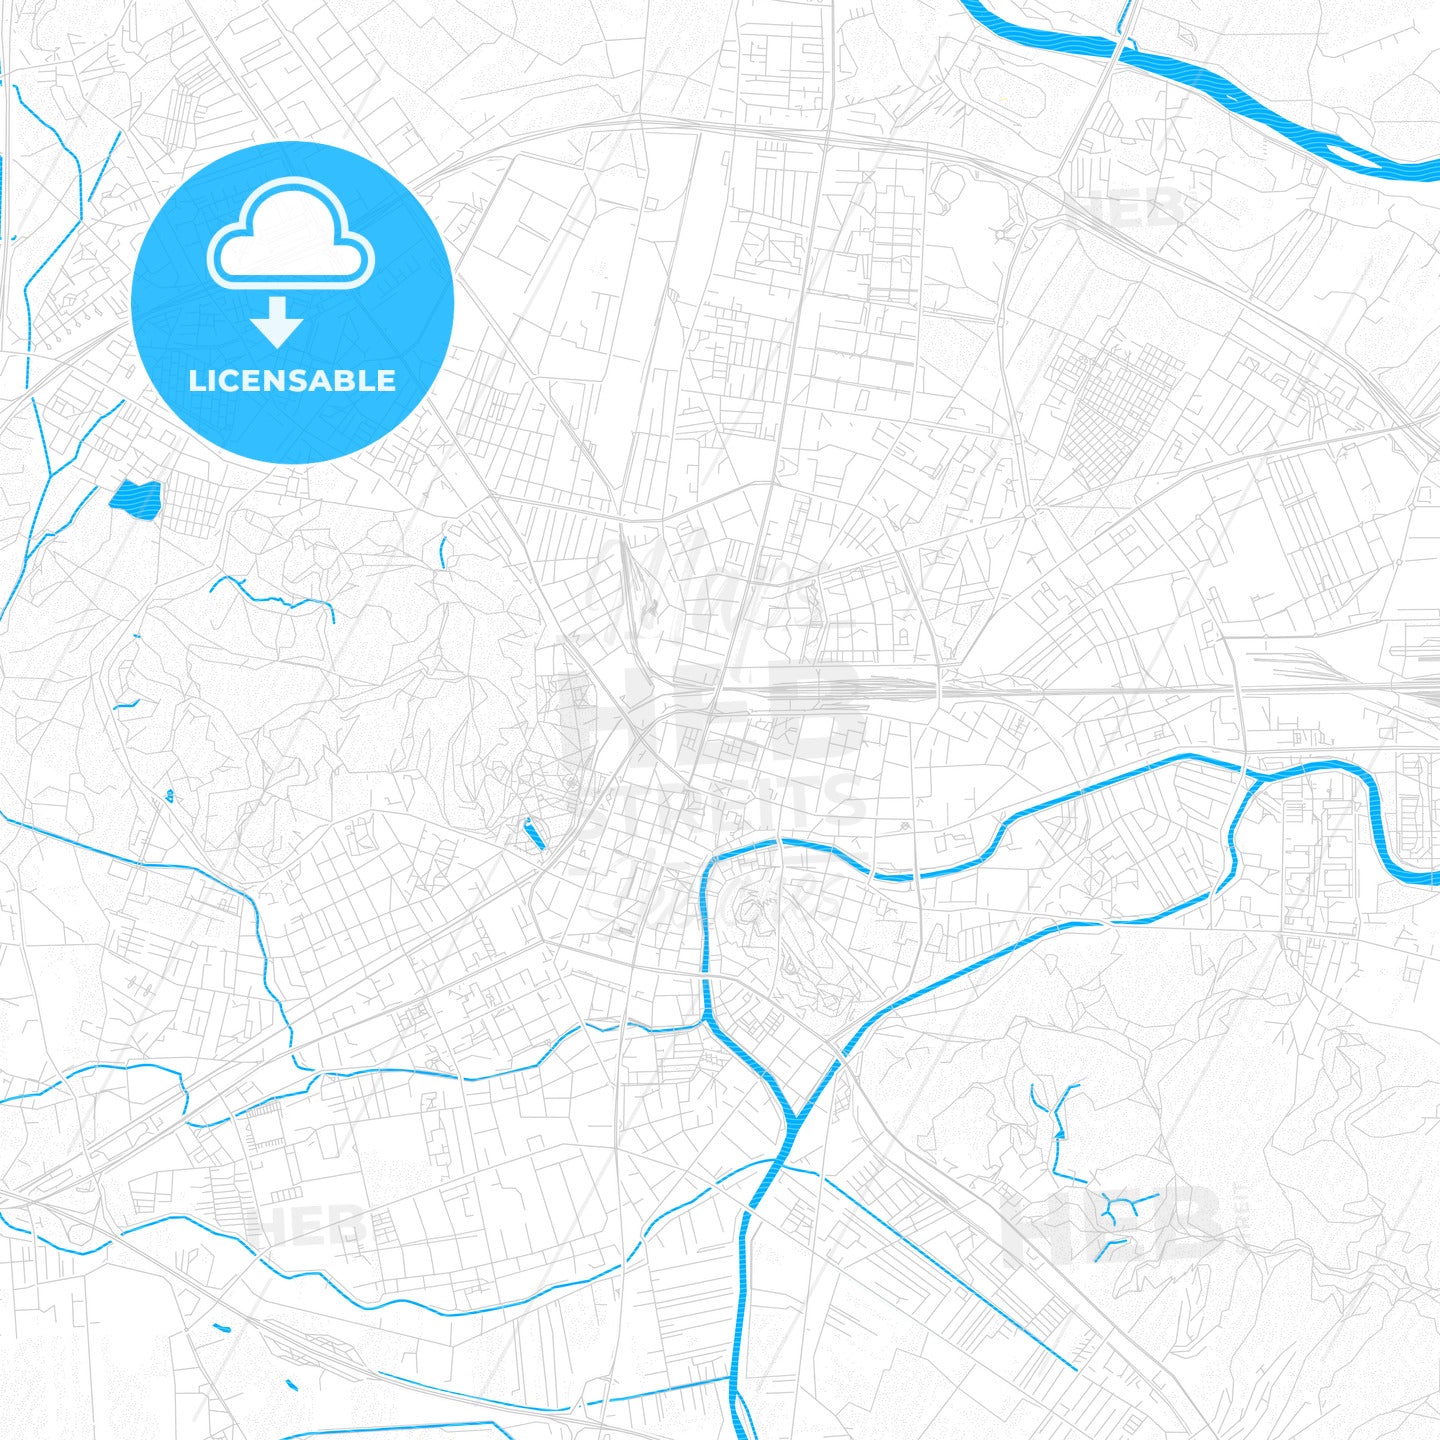 Ljubljana, Slovenia PDF vector map with water in focus